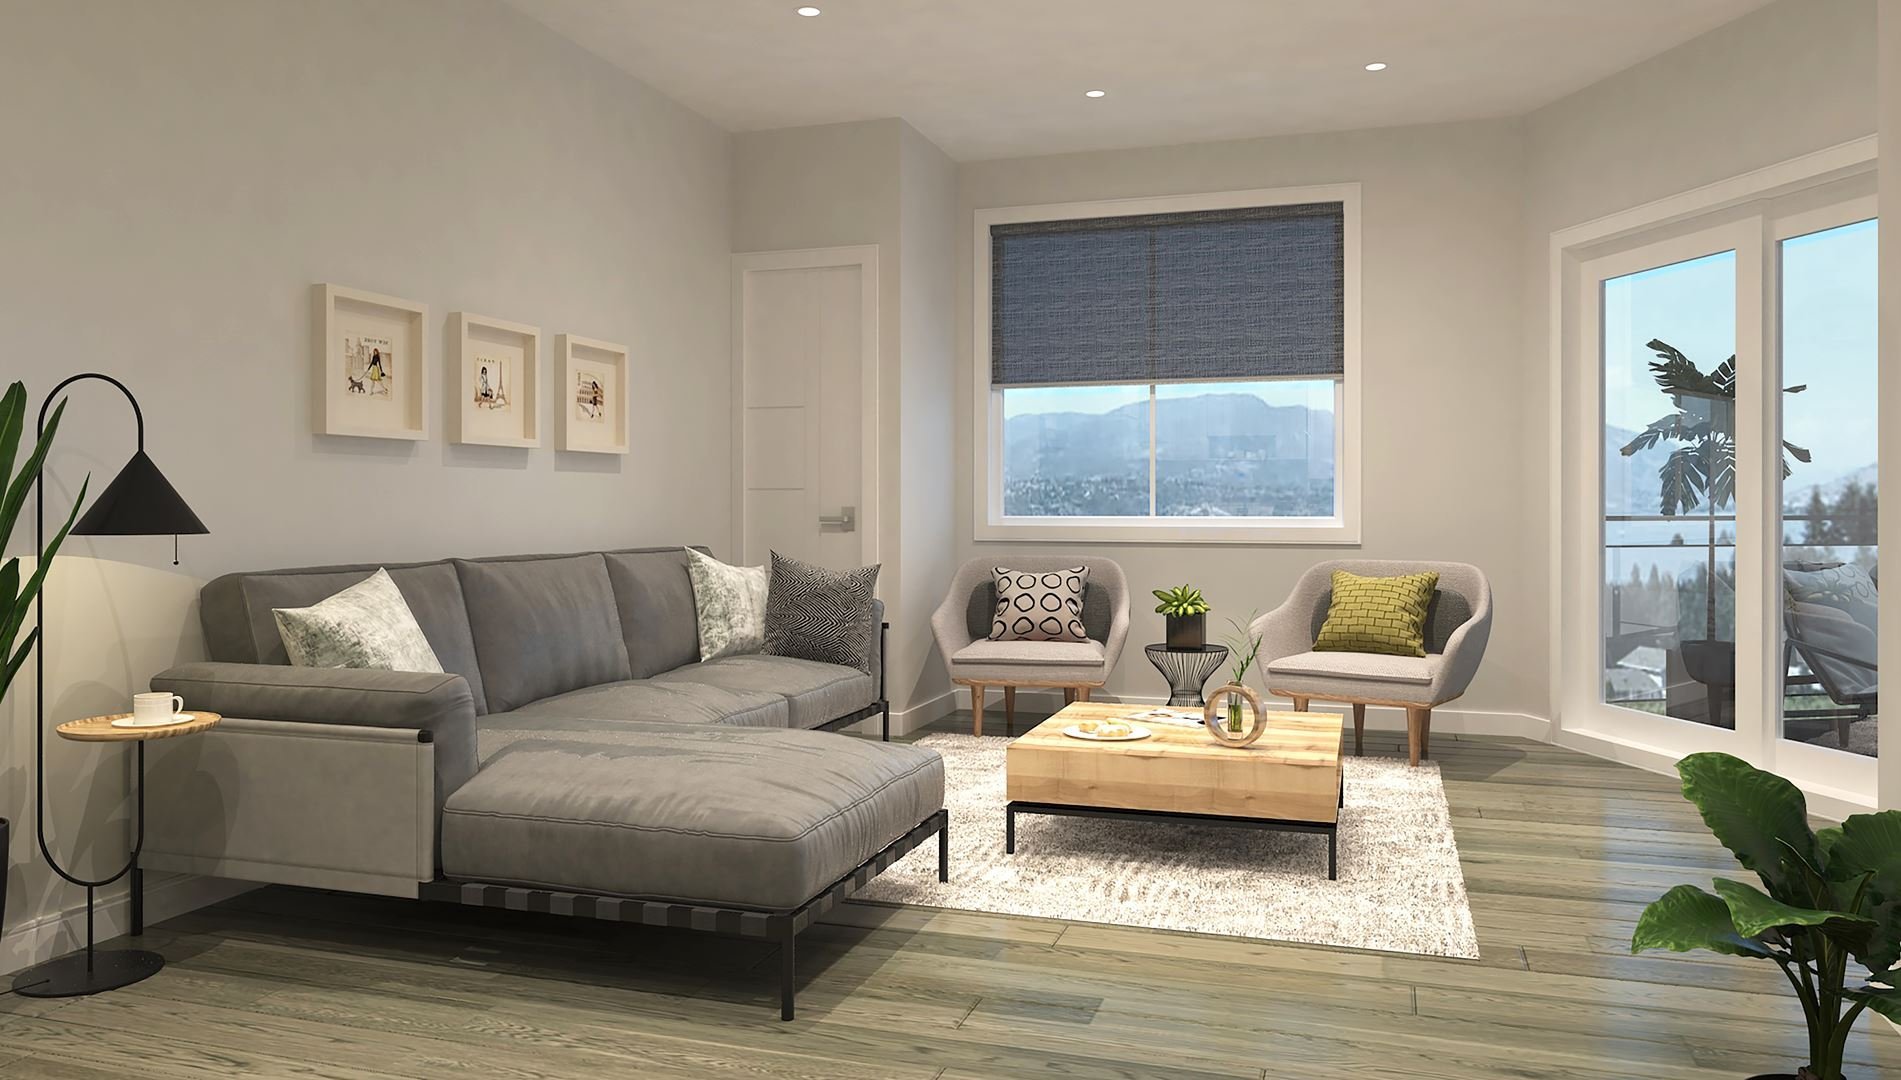 Green Square vert - Plan B living room rendering!